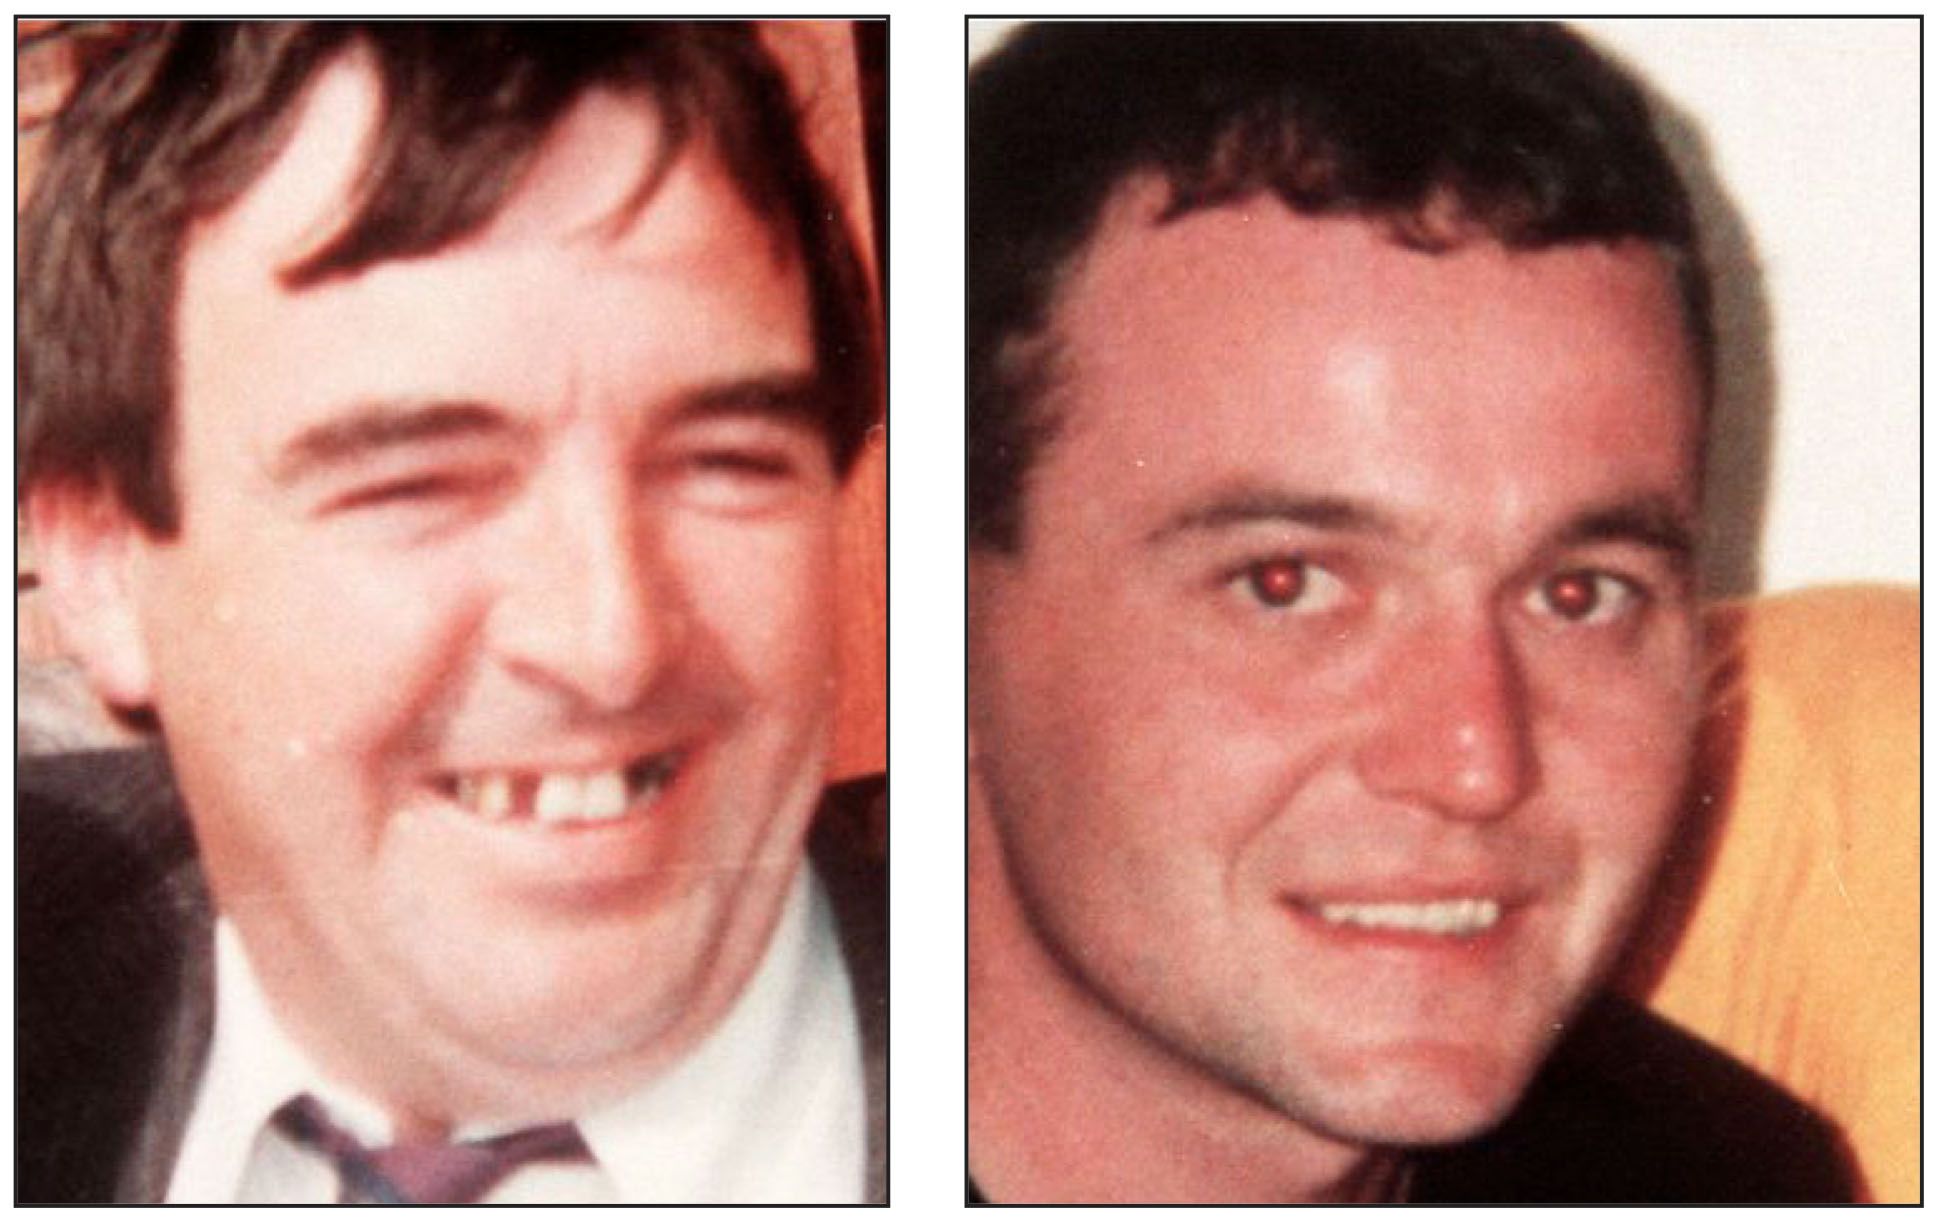 MURDERED: Eamon Fox and Gary Convie were murdered in 1994